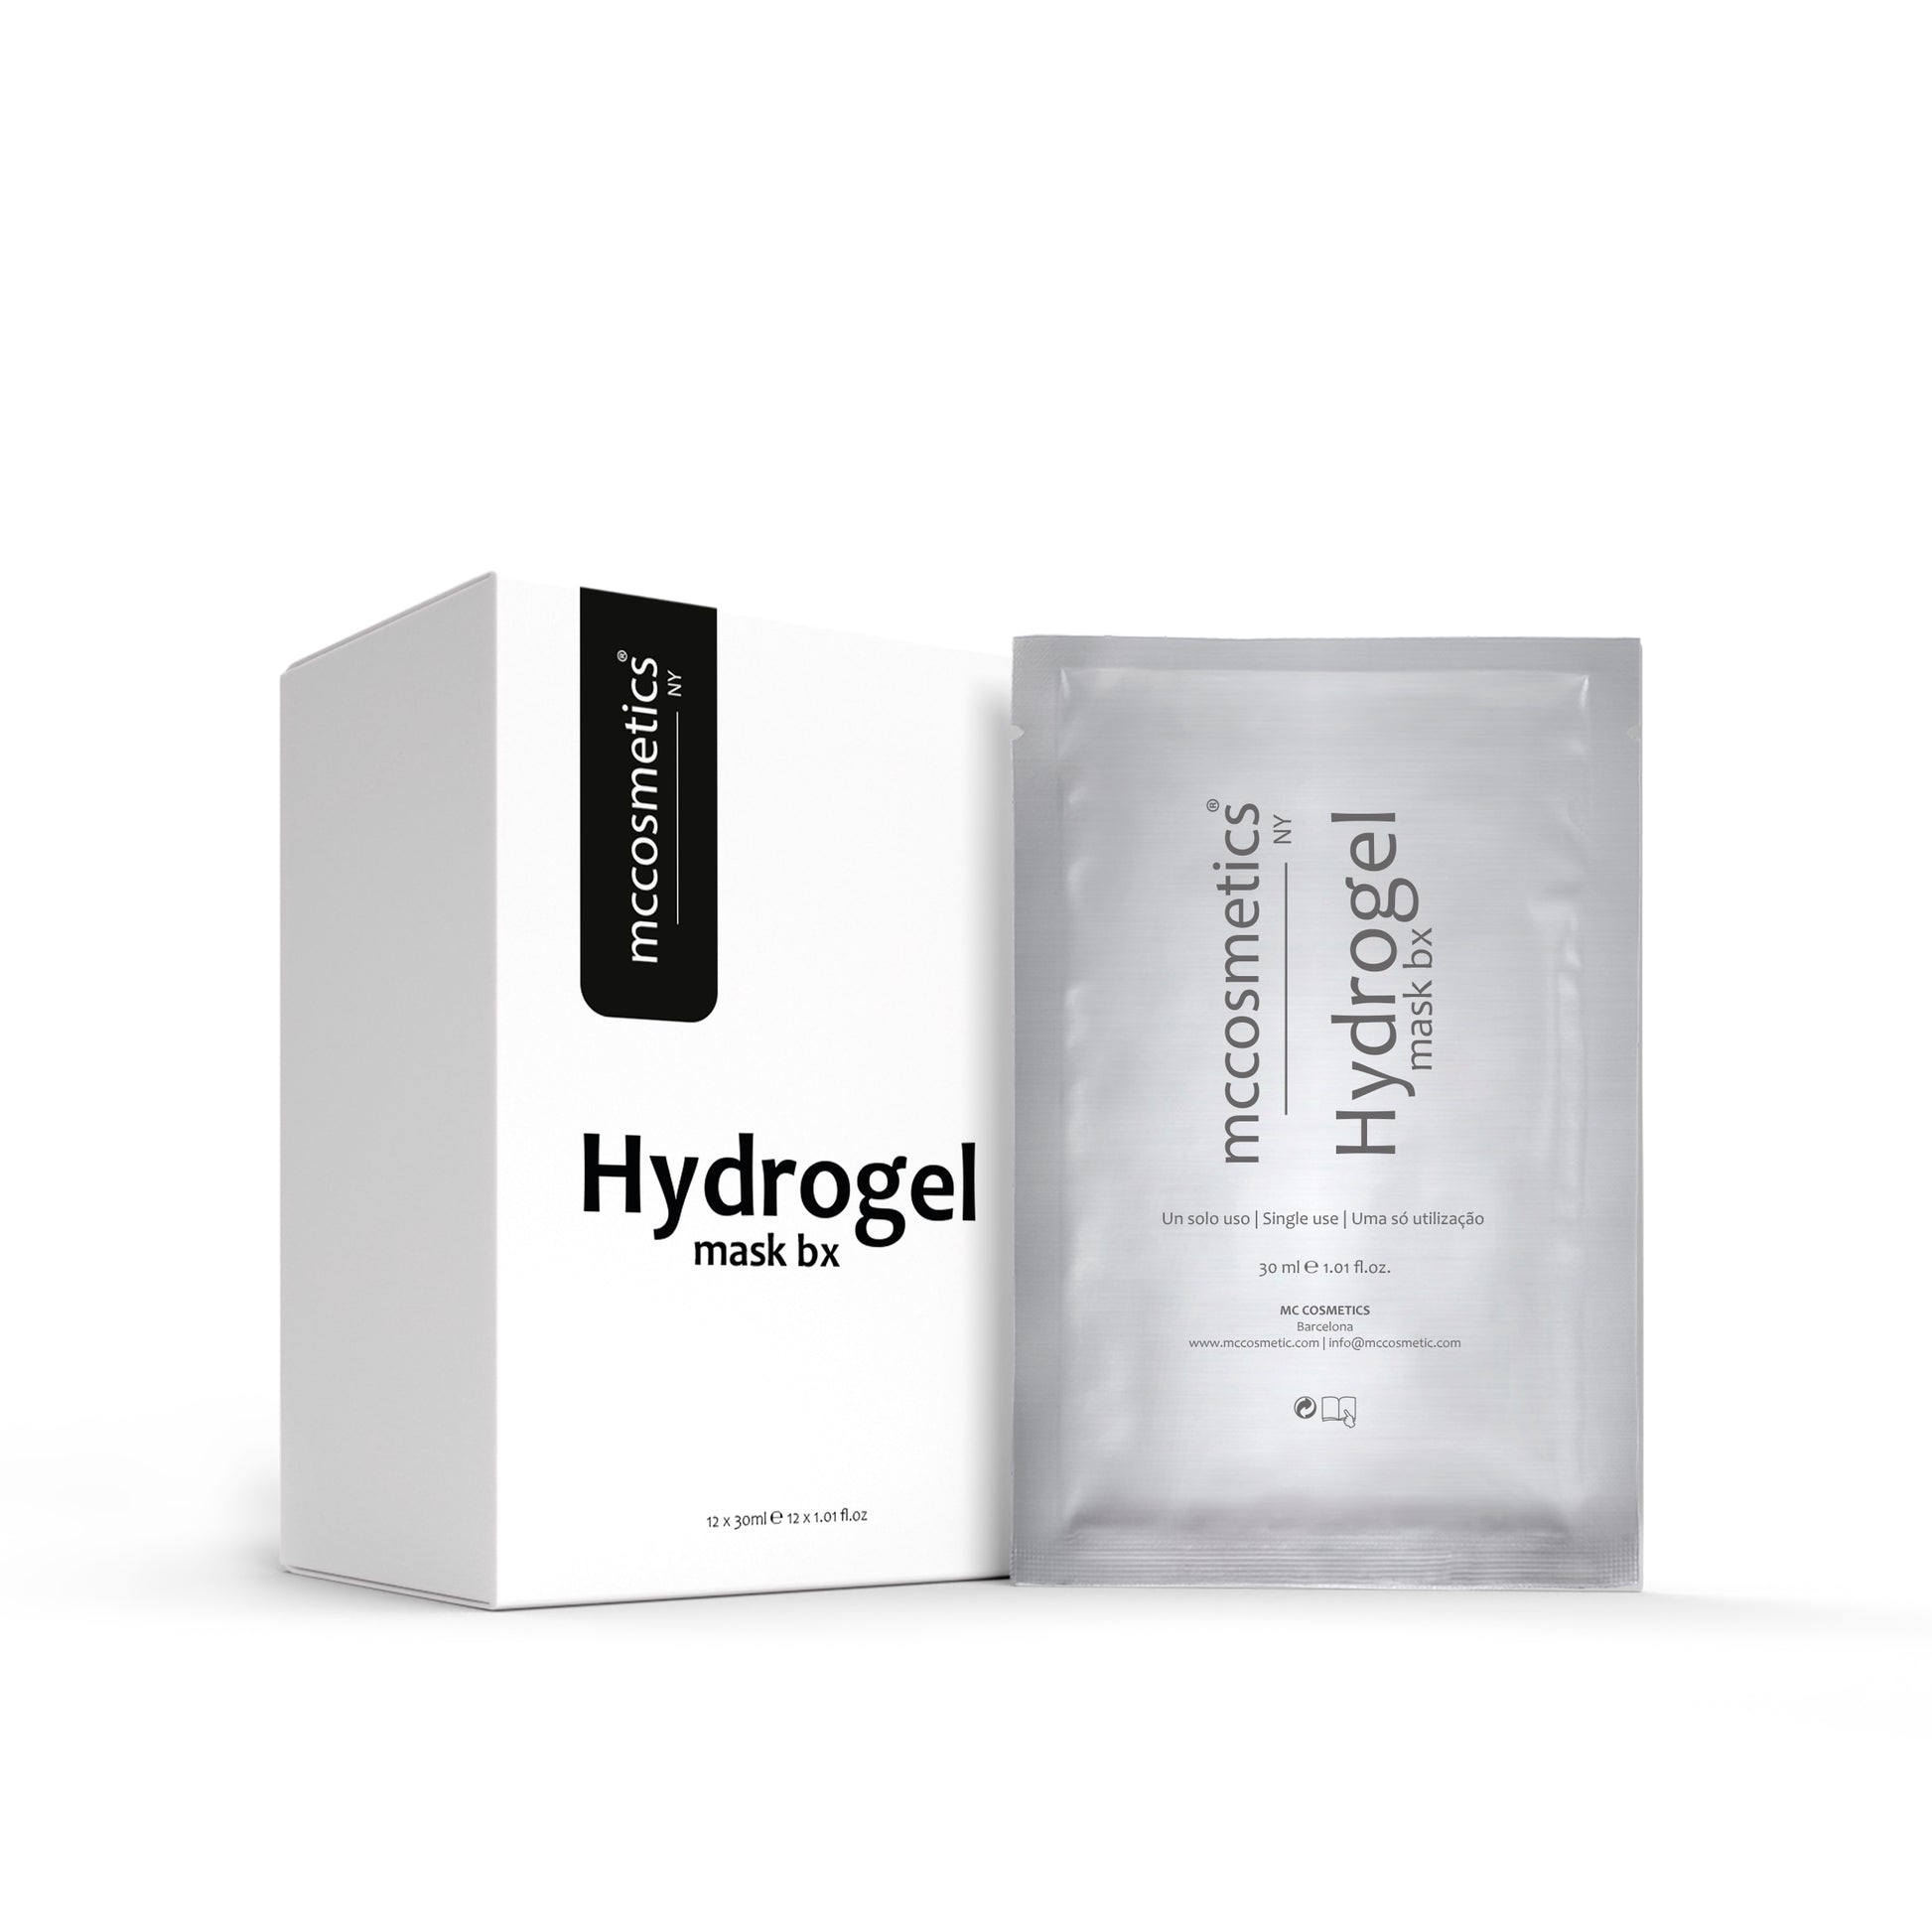 hydrogel mask - mccosmetics.ny